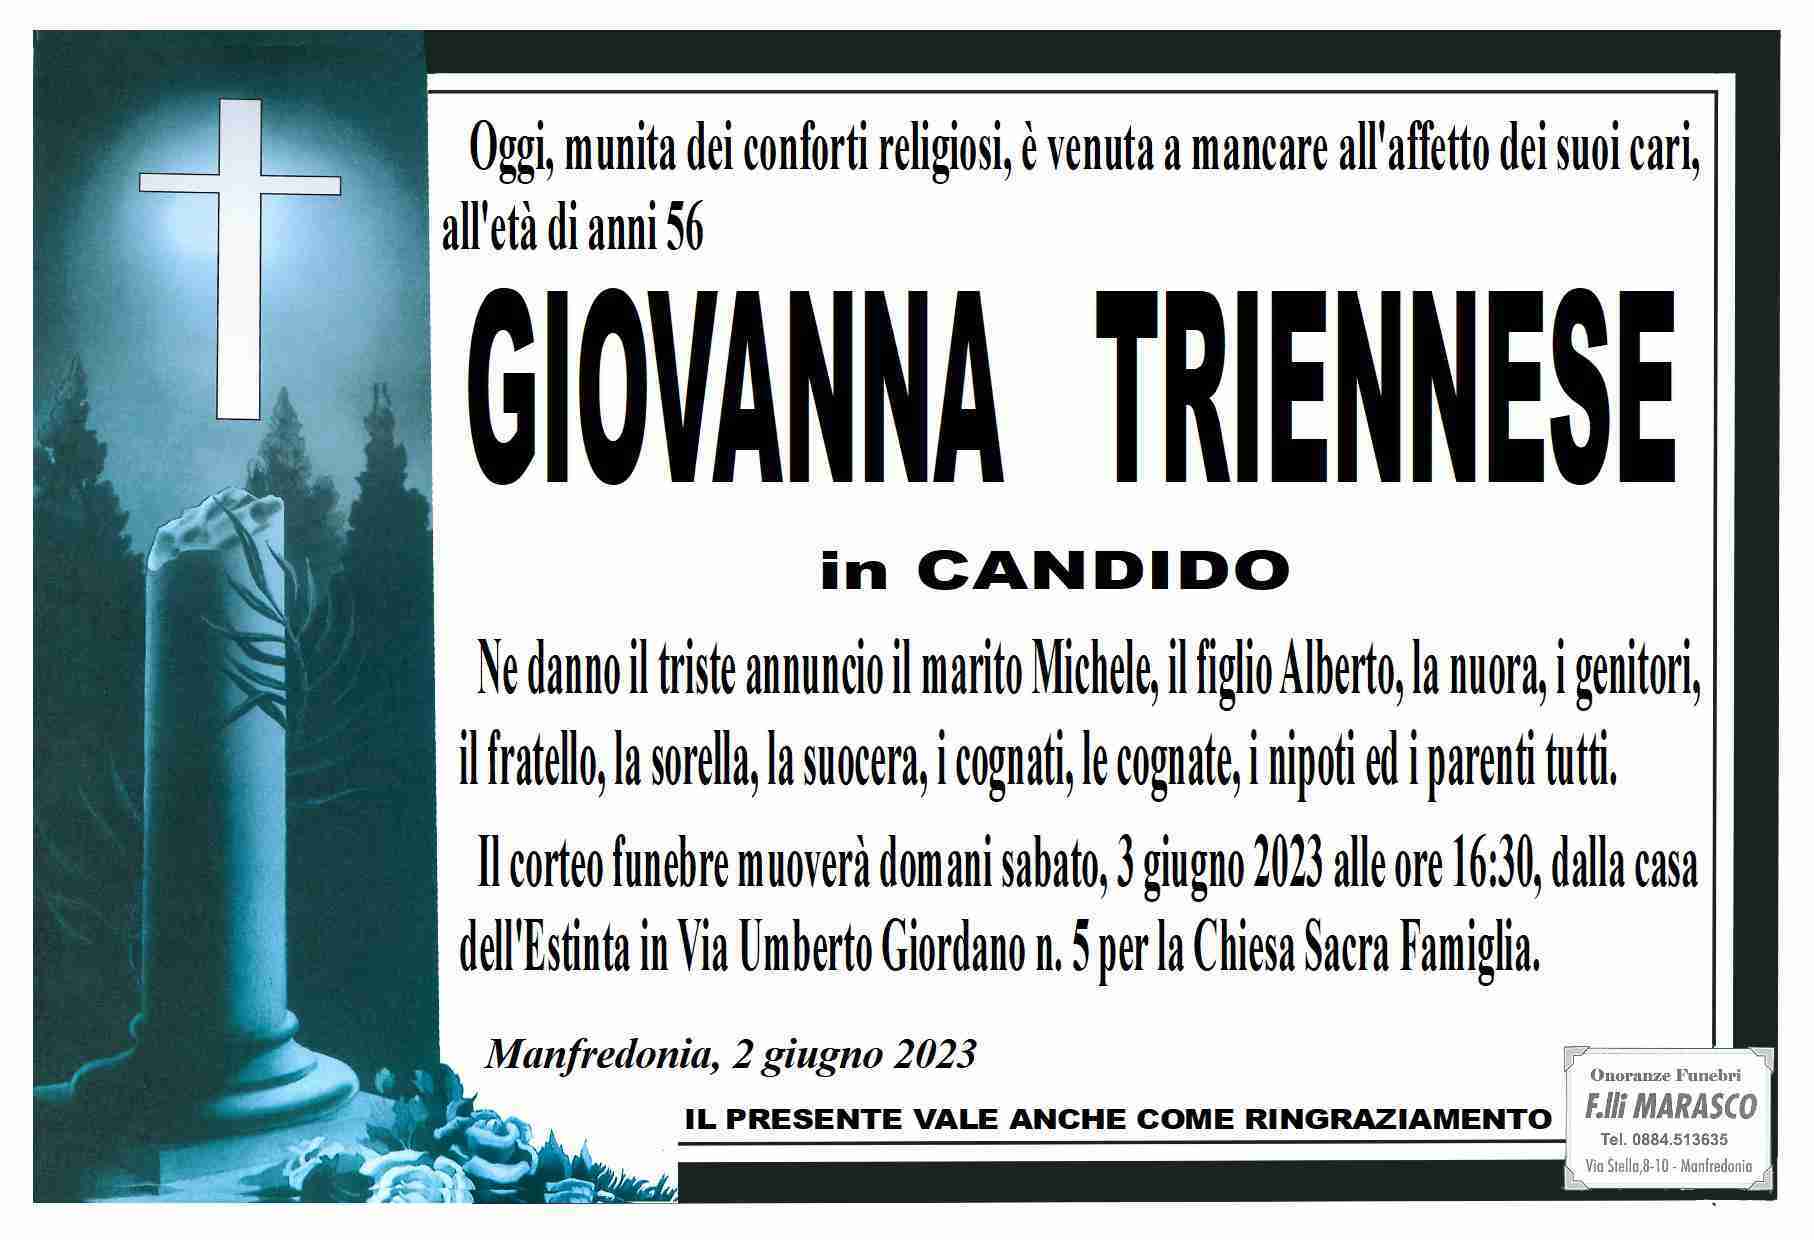 Giovanna Triennese